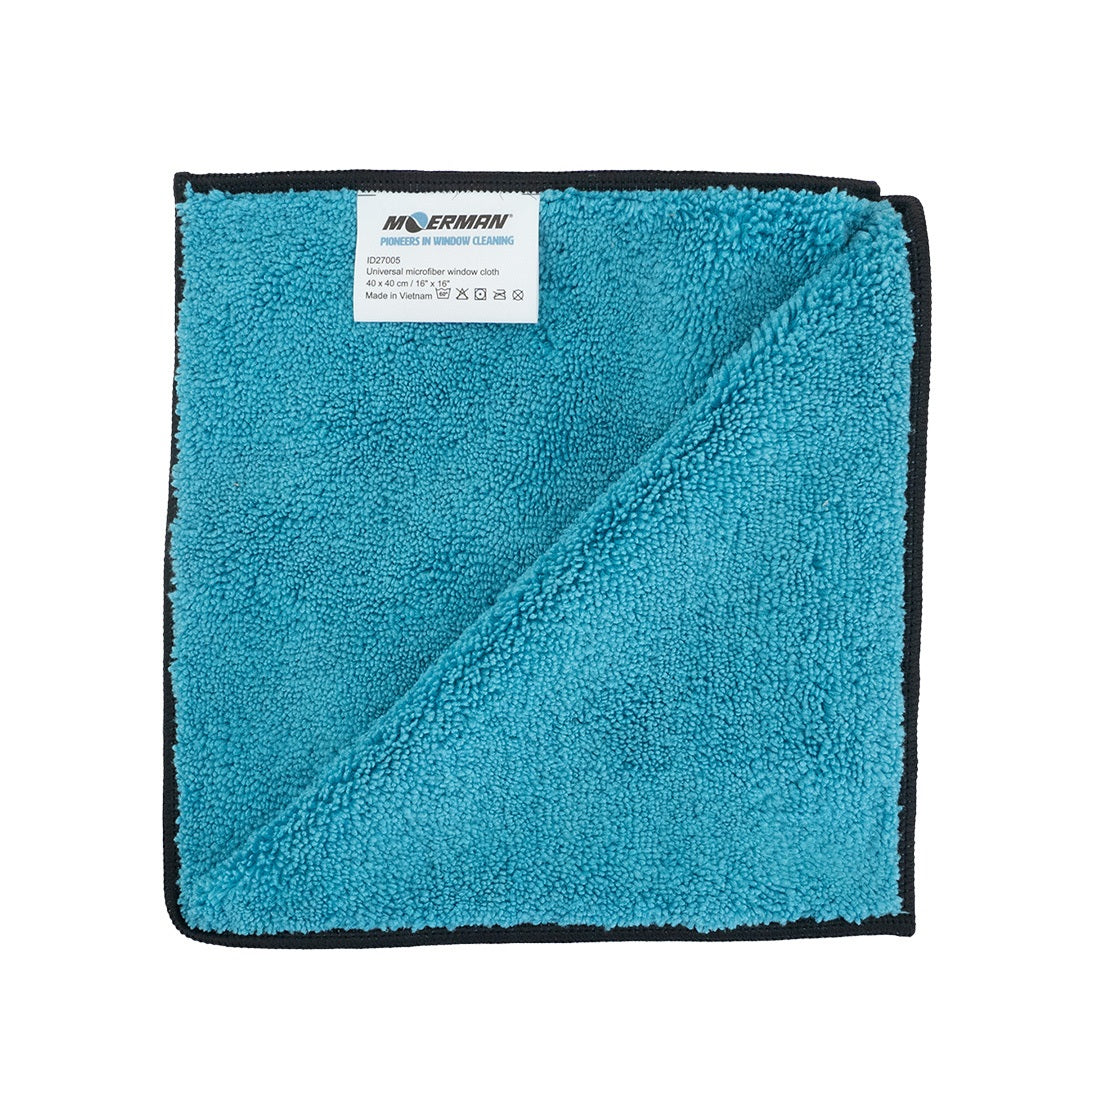 Moerman Microfiber Towel Folded View